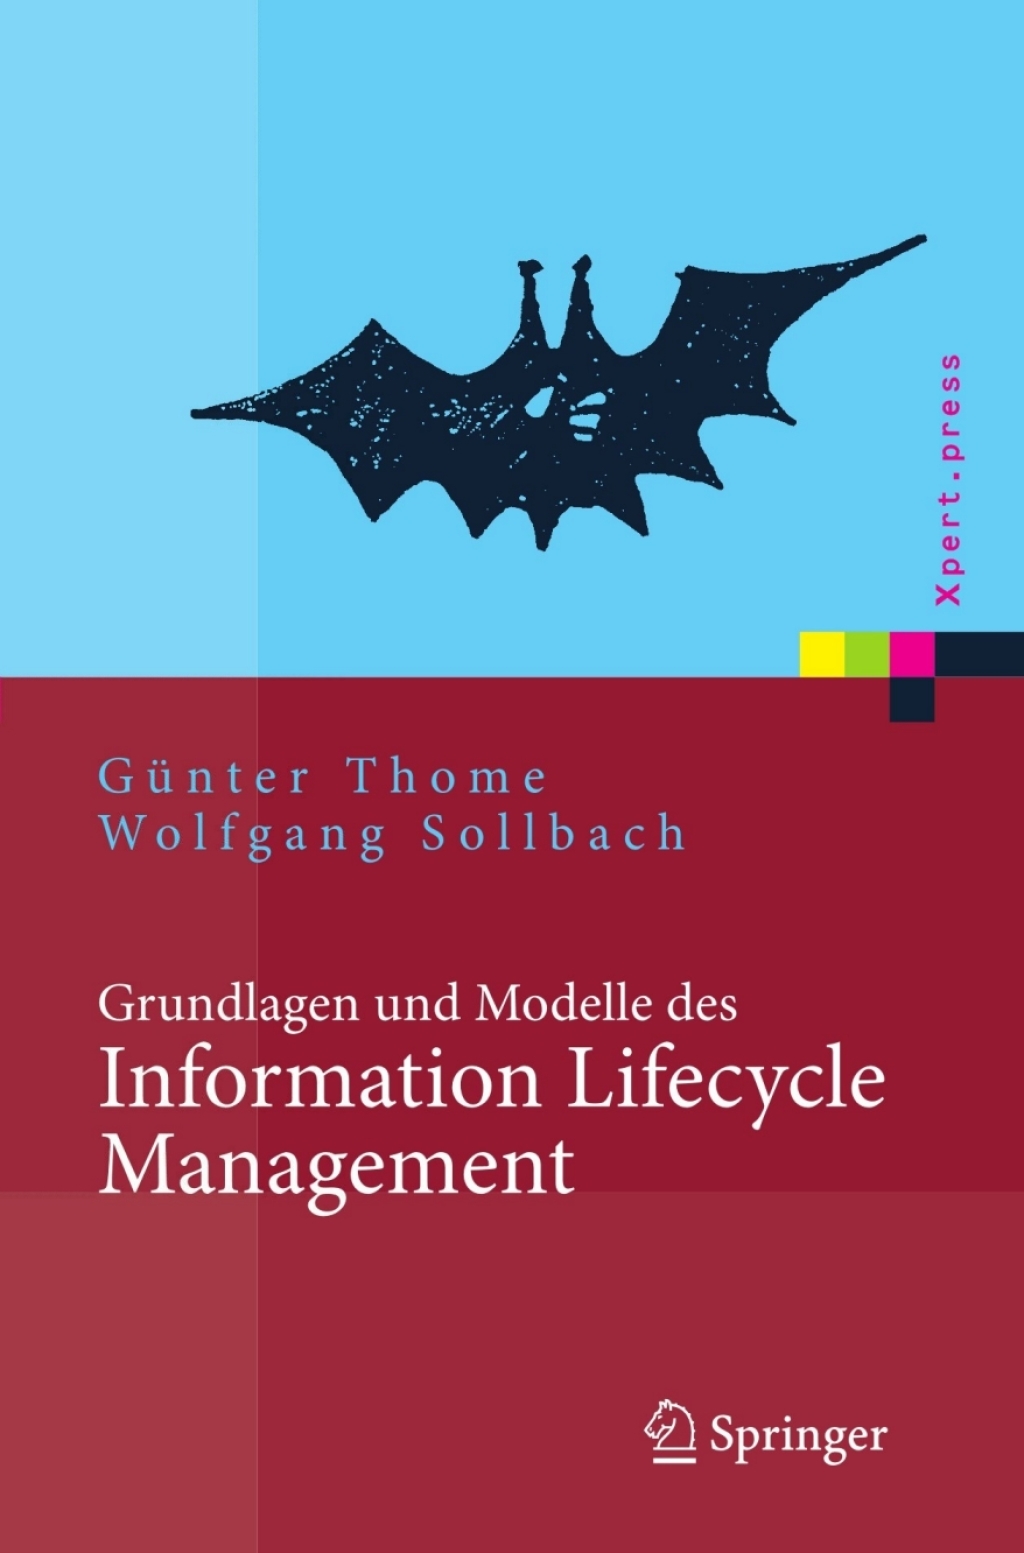 ISBN 9783540690795 product image for Grundlagen und Modelle des Information Lifecycle Management (eBook Rental) | upcitemdb.com